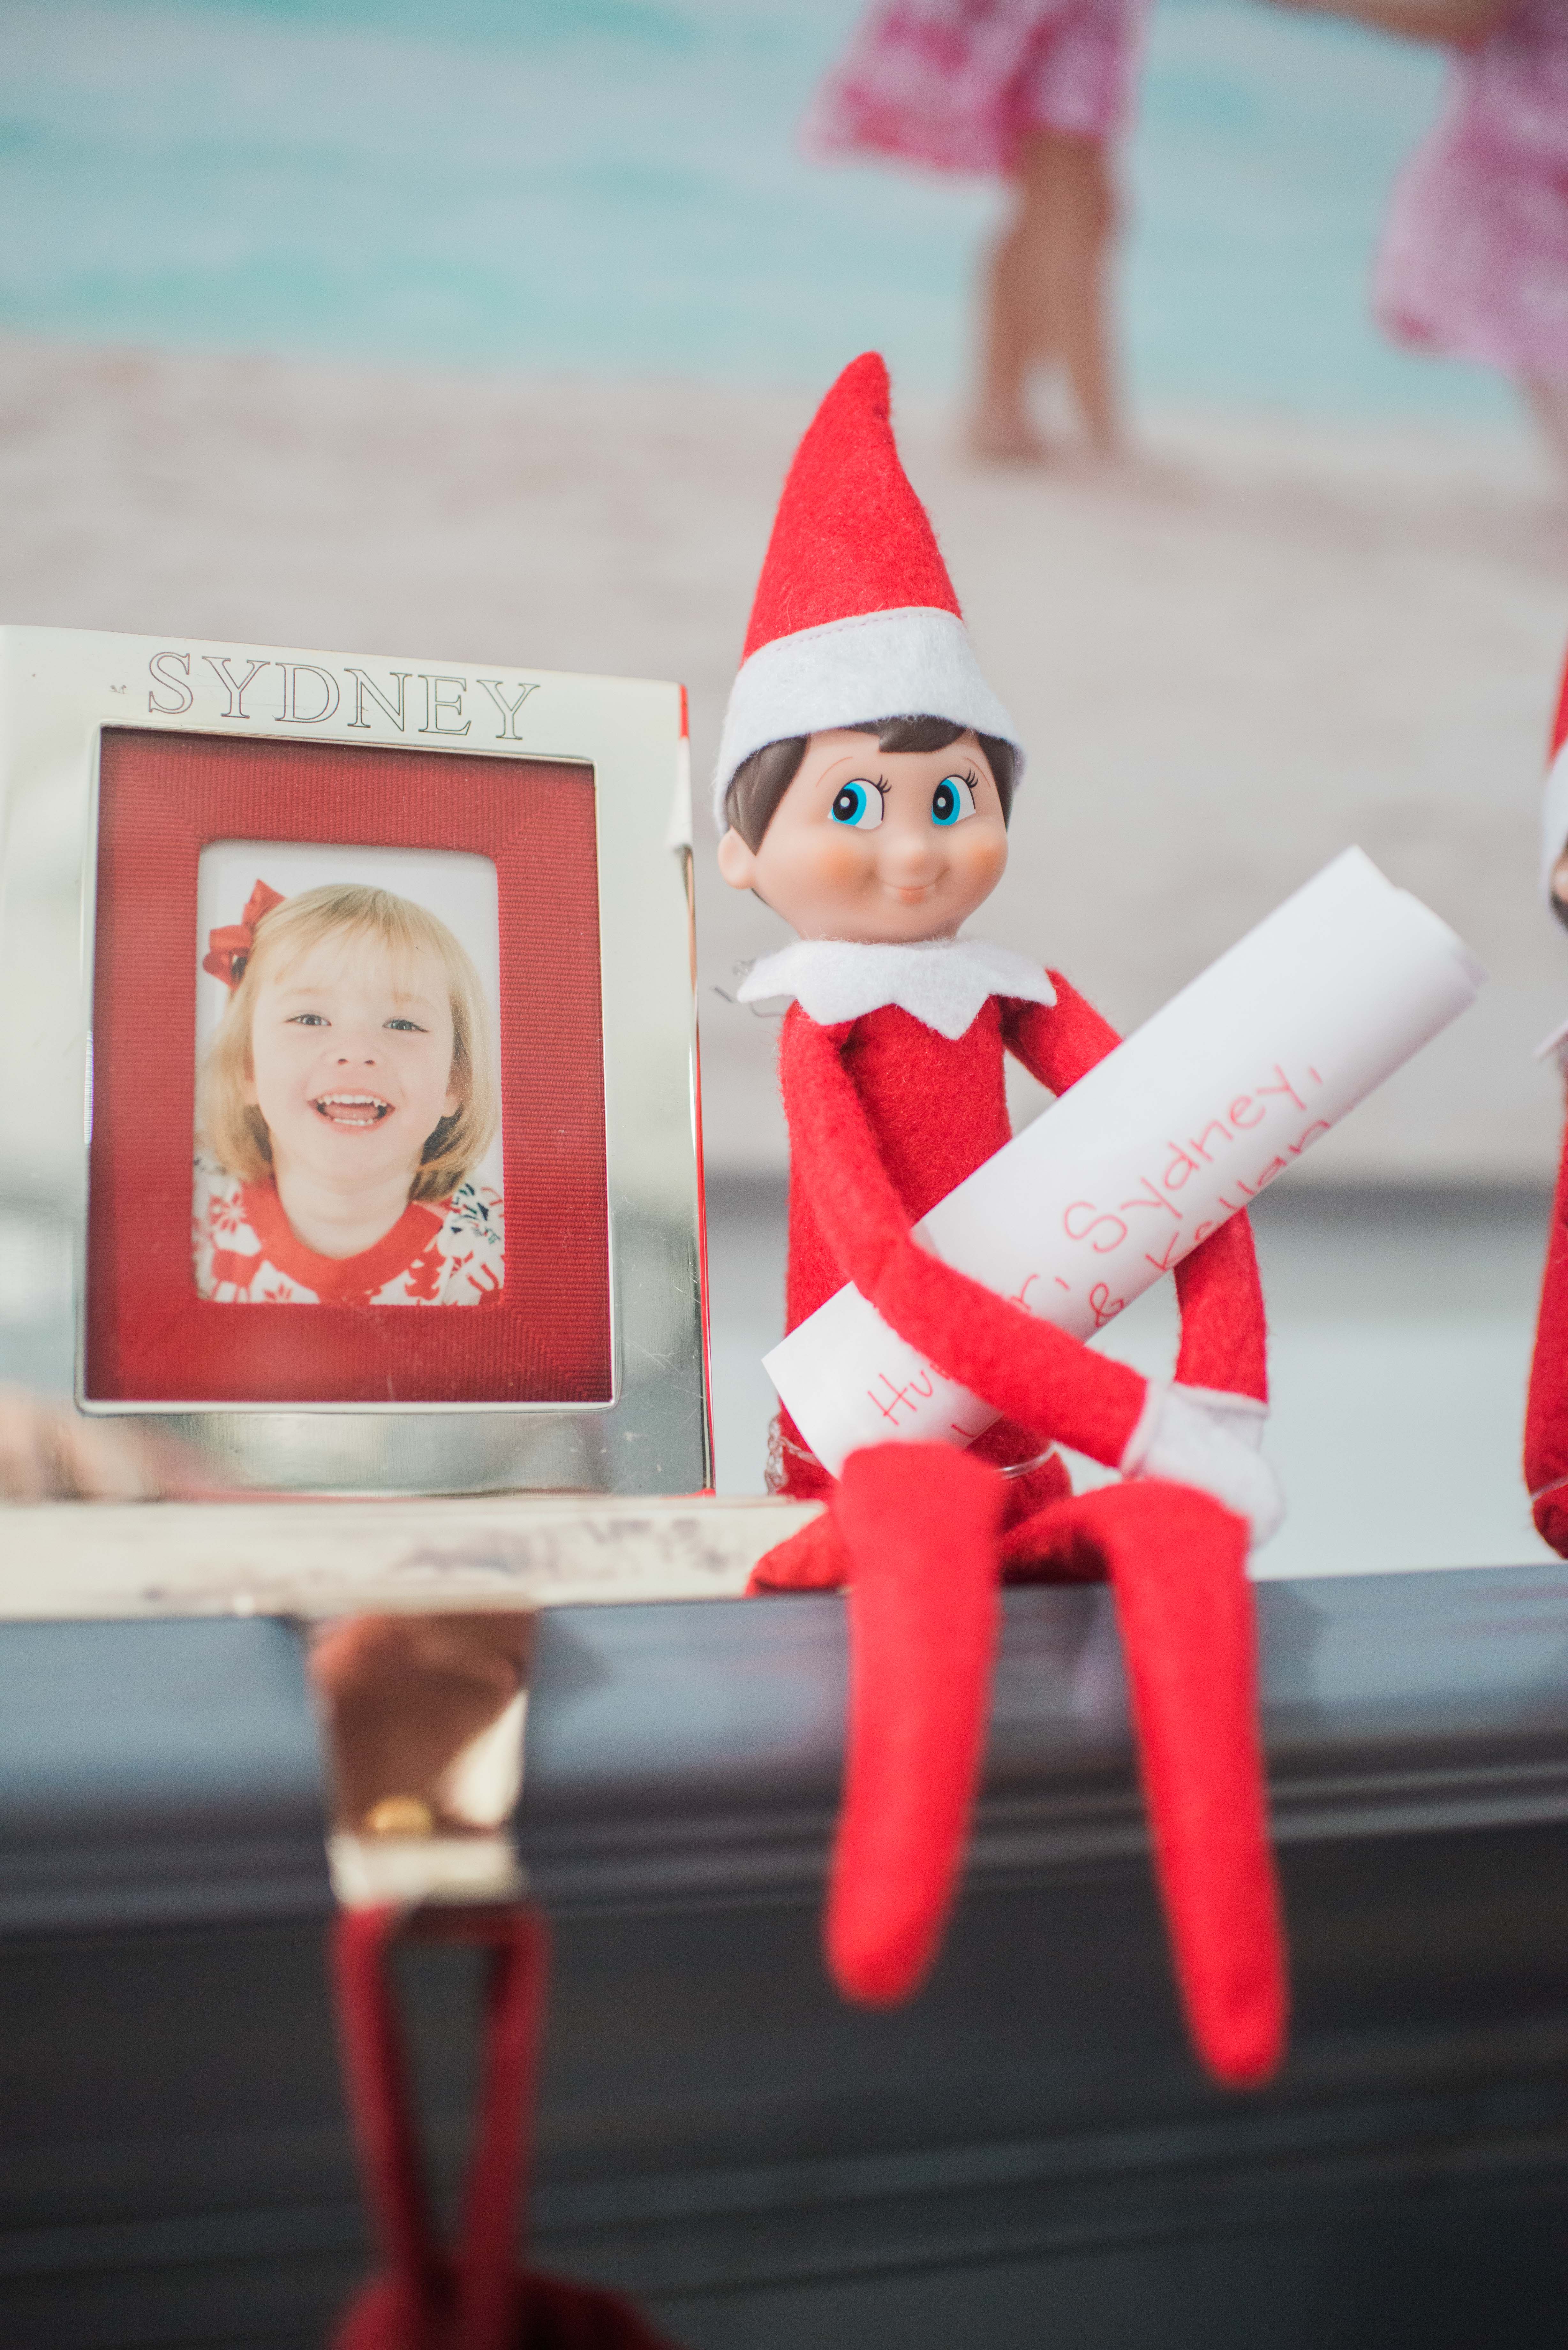 Best Elf on the Shelf idea | Mom tips to make Christmas easier | Elf on the Shelf hack